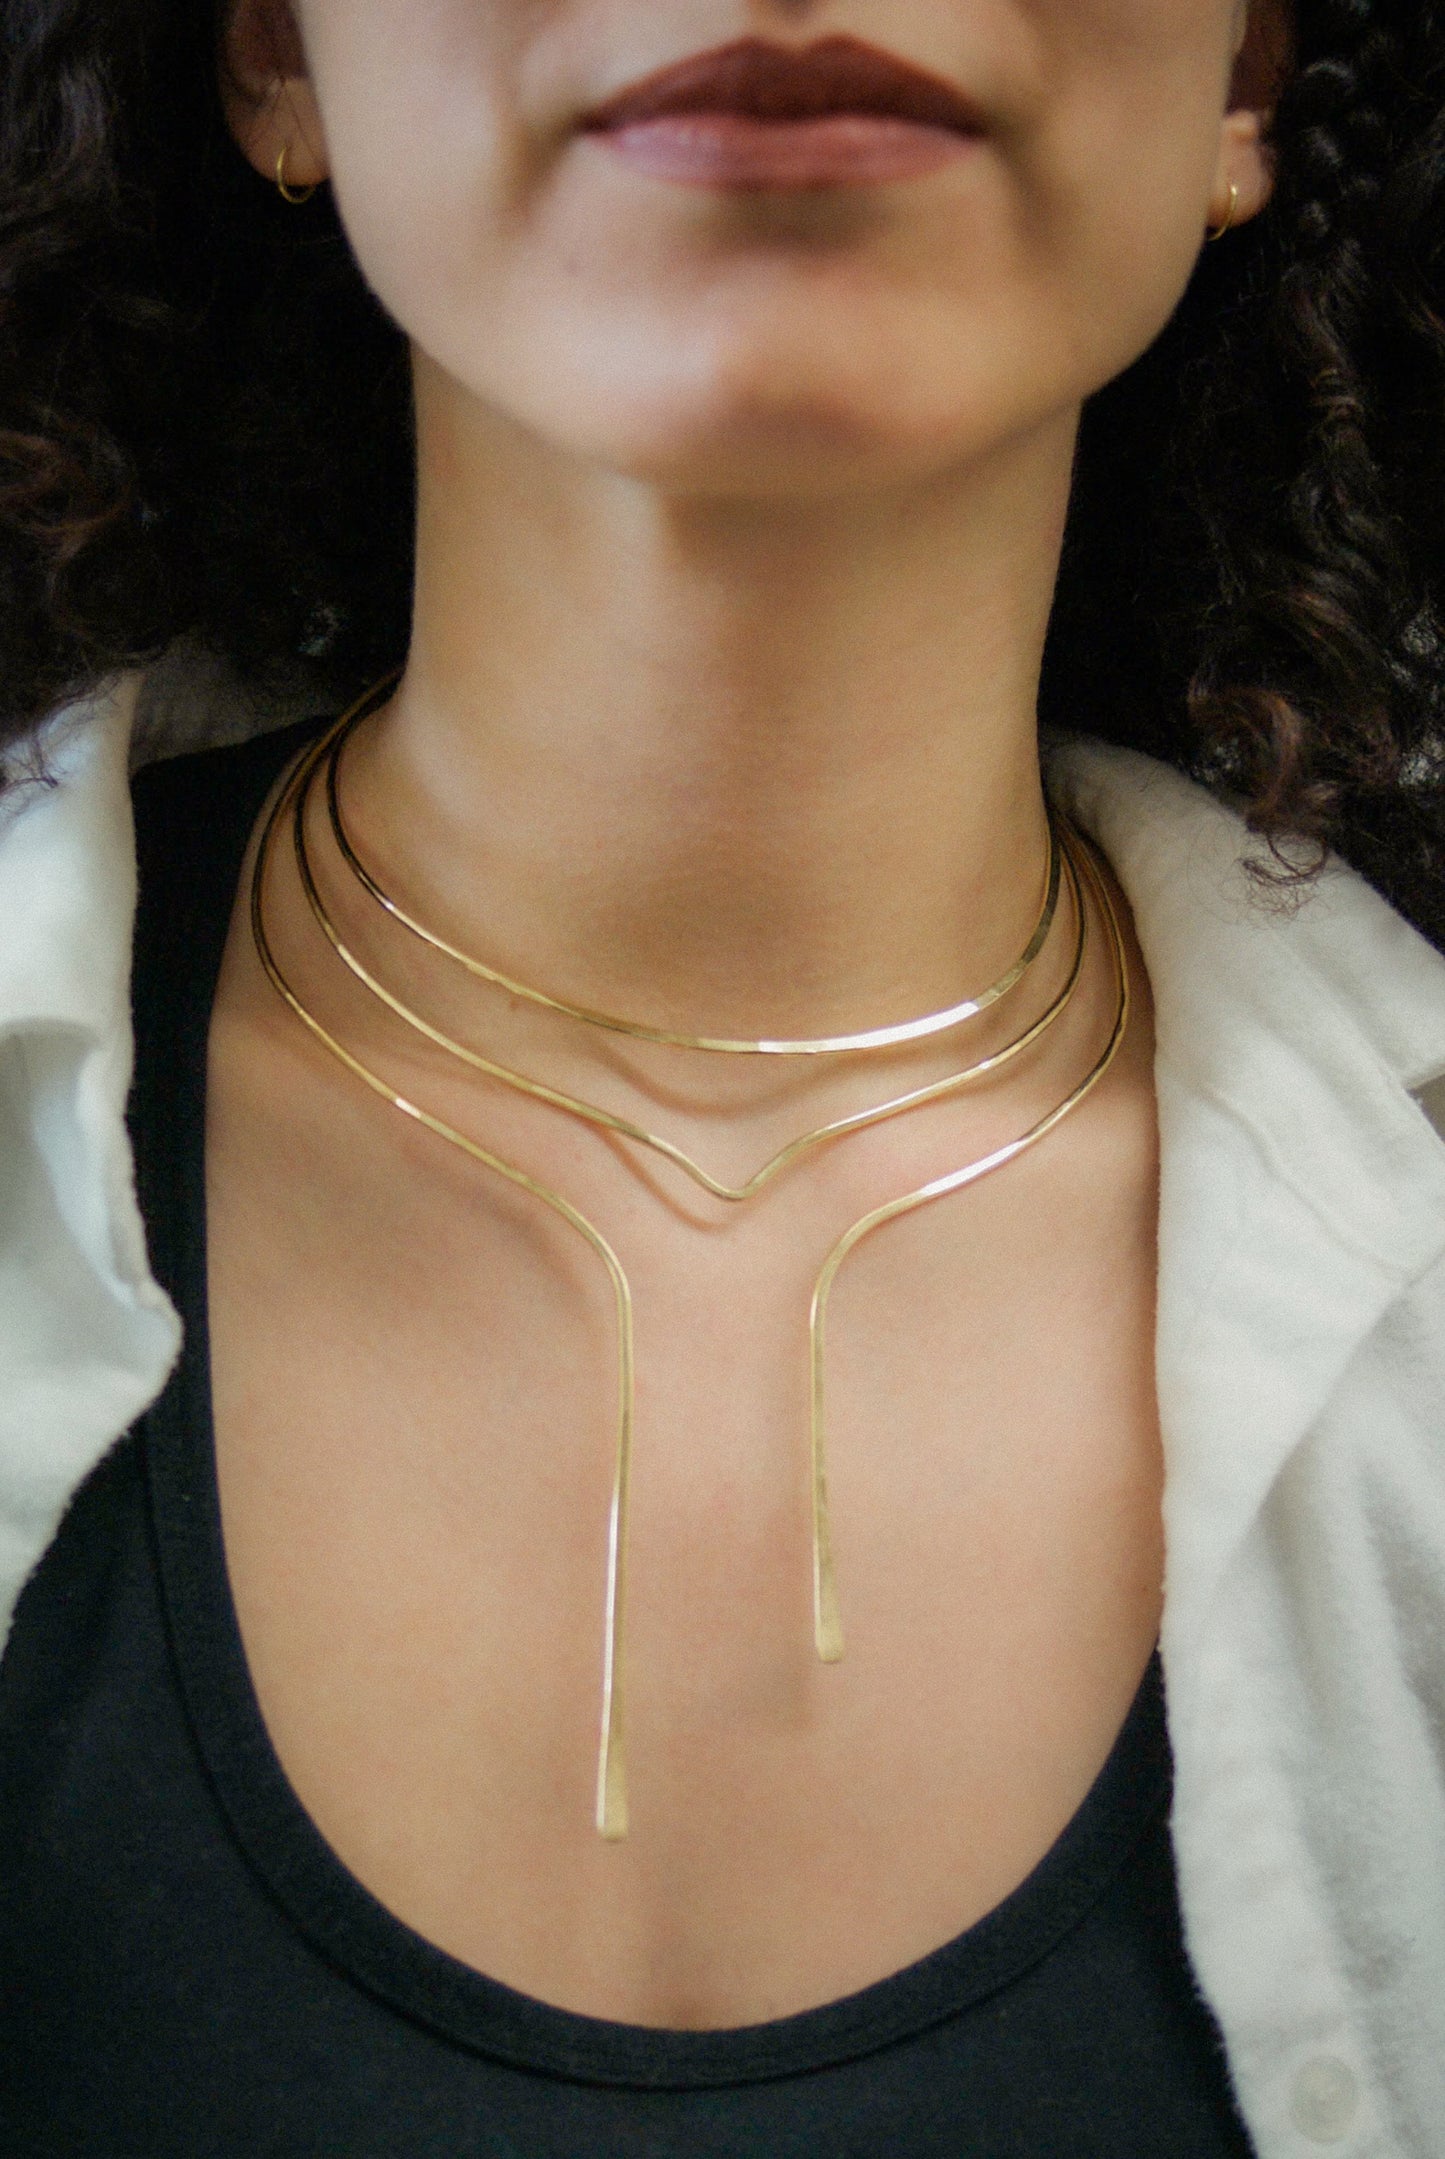 Sunburst Collar Necklace, Gold Fill, Rose Gold Fill, or Sterling Silver